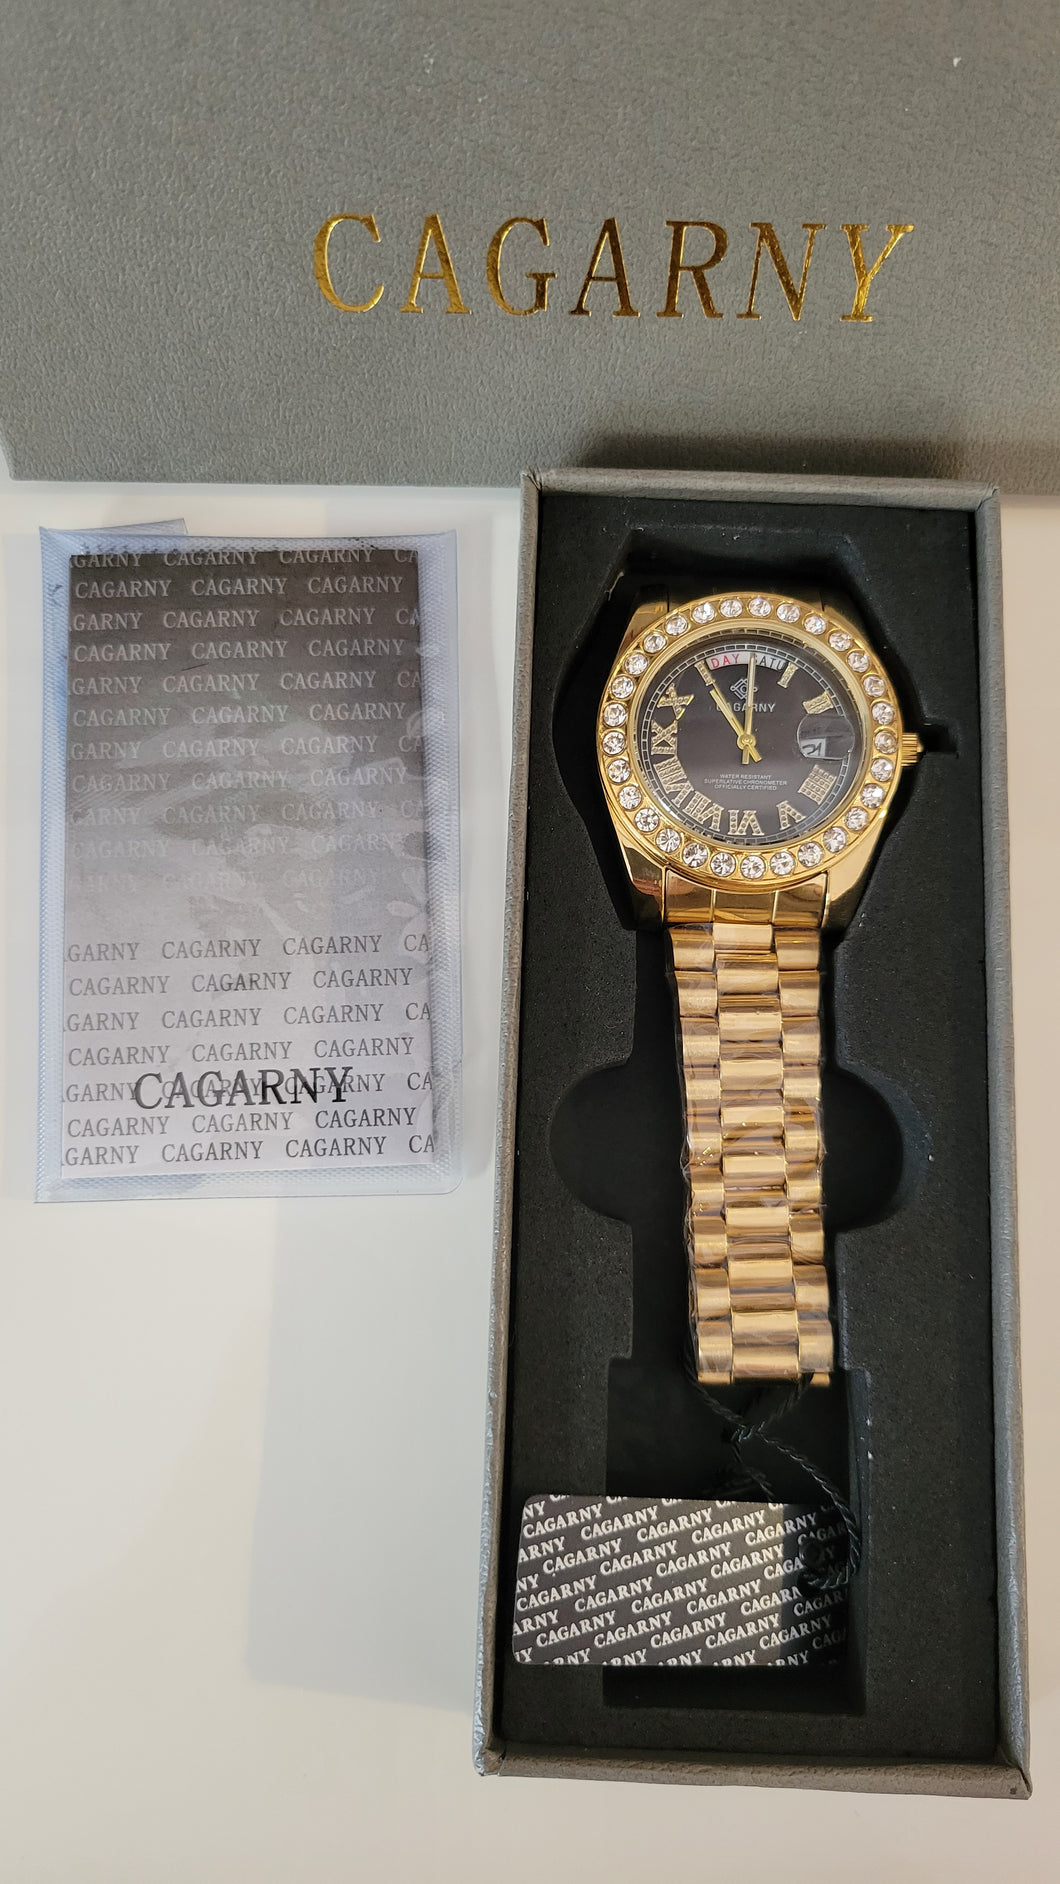 NIB Cagarny Crystal-Diamond Gold Watch waterproof men's watch